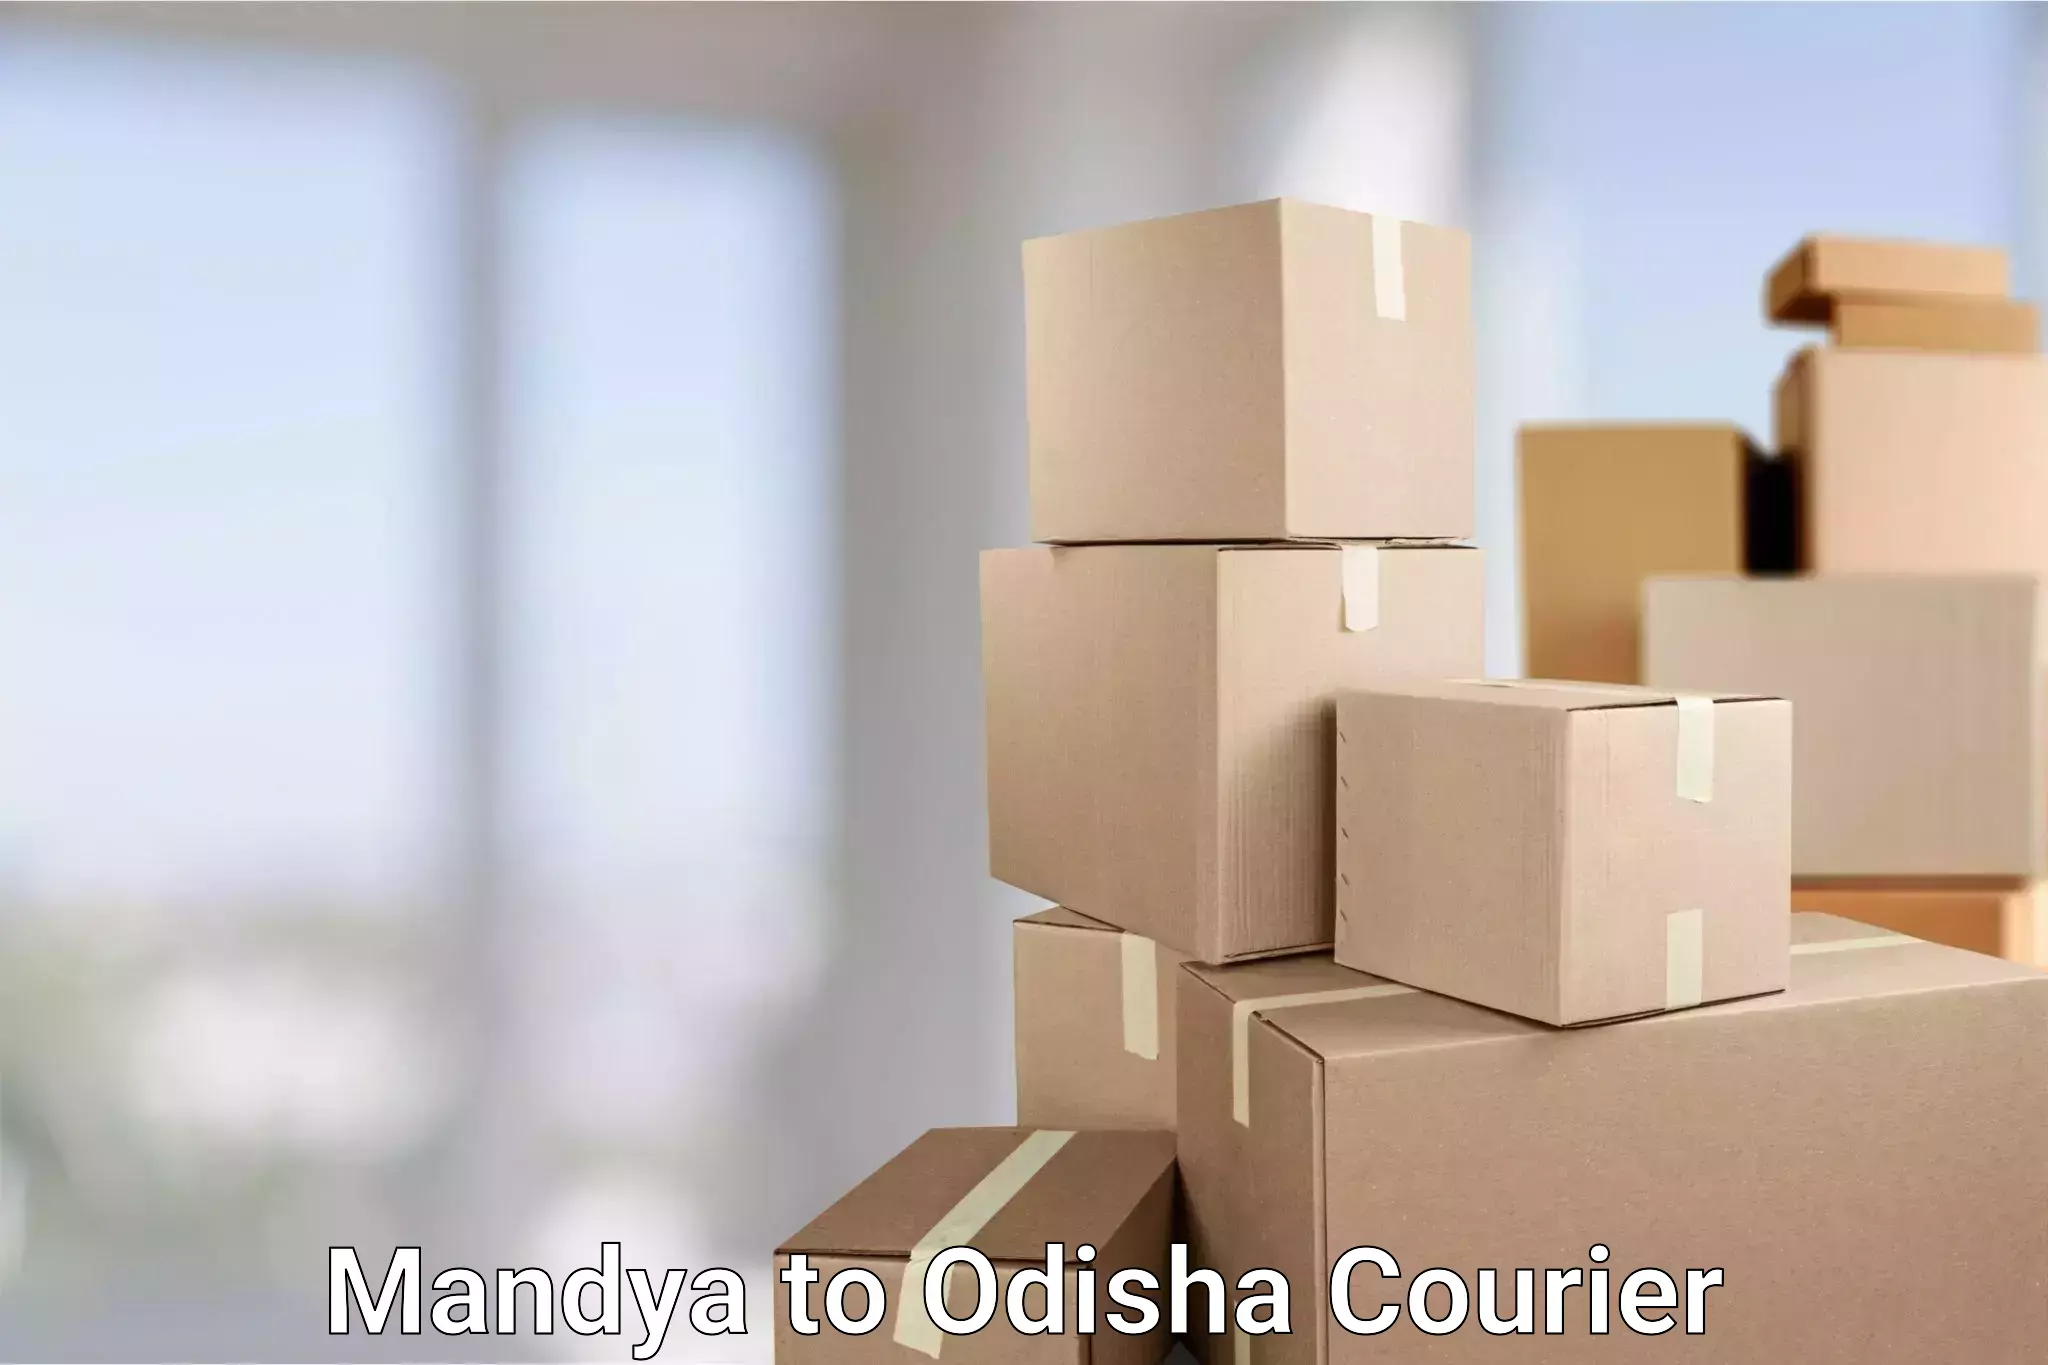 Lightweight parcel options Mandya to Basta